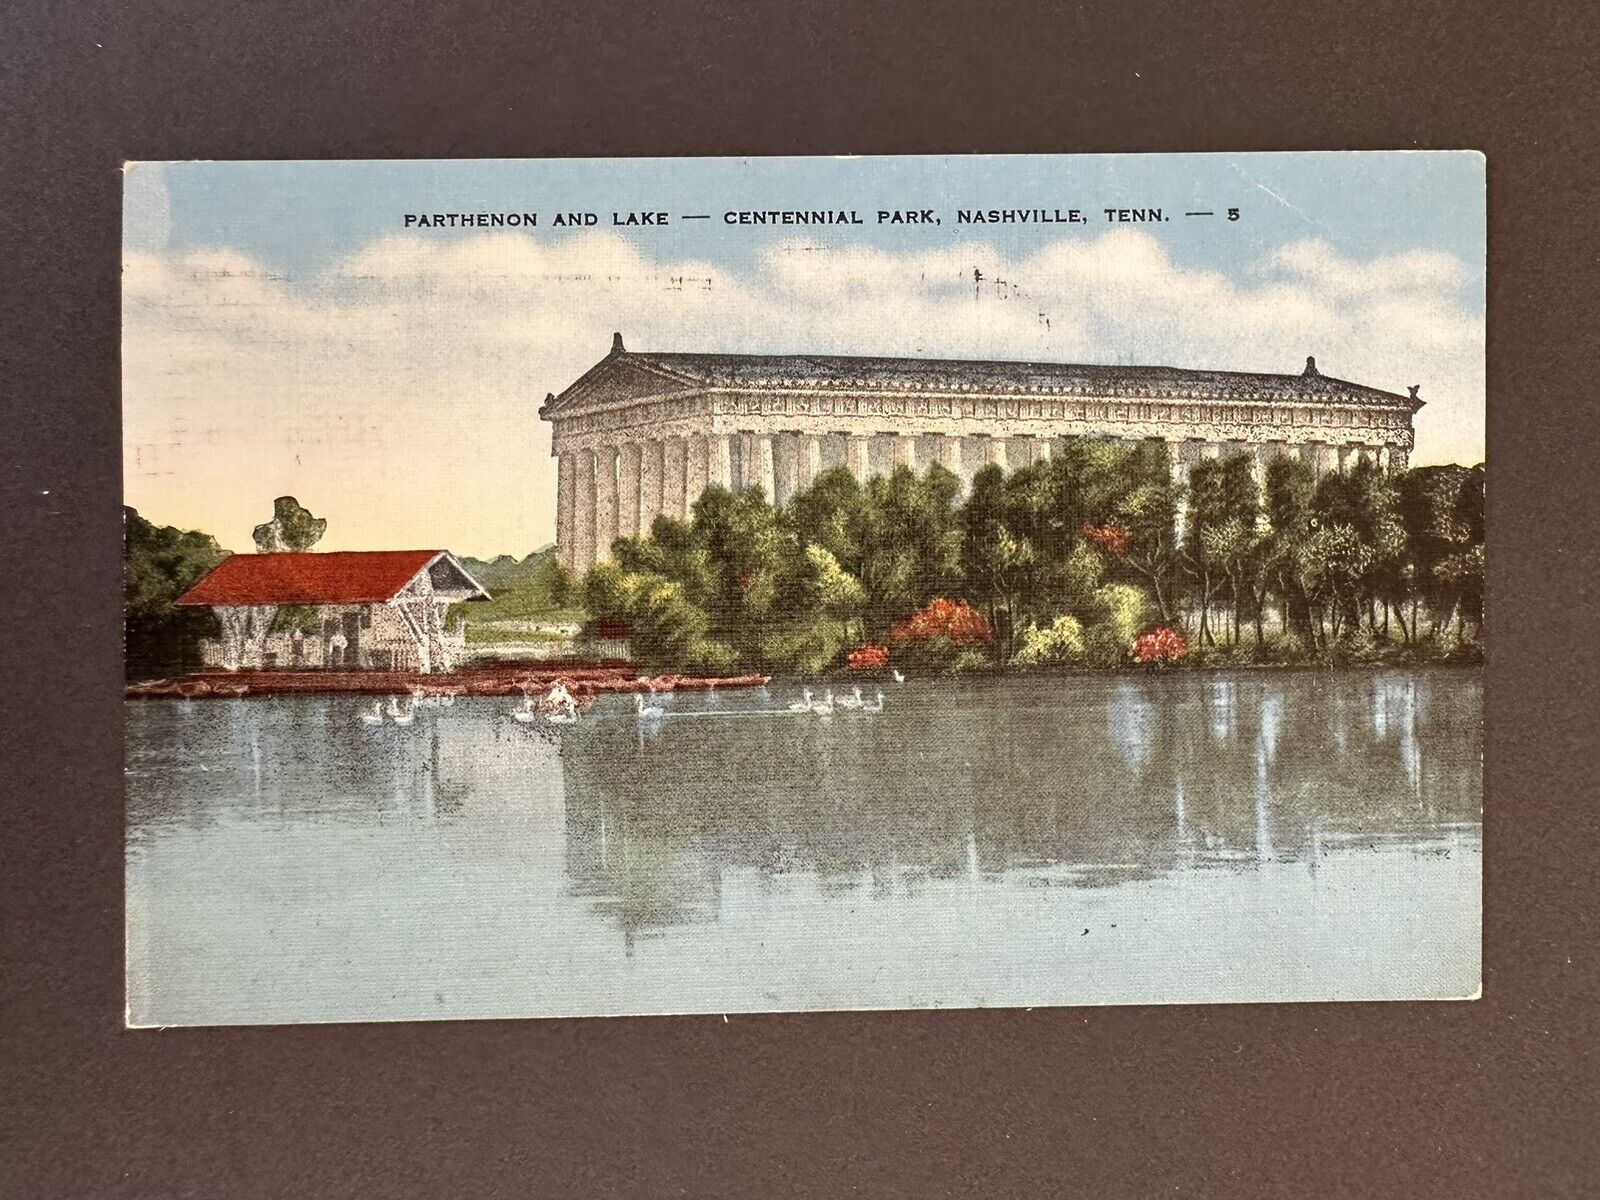 PARTHENON & LAKE CENTENNIAL PARK, Nashville Tennessee 1955 Vintage Postcard D228